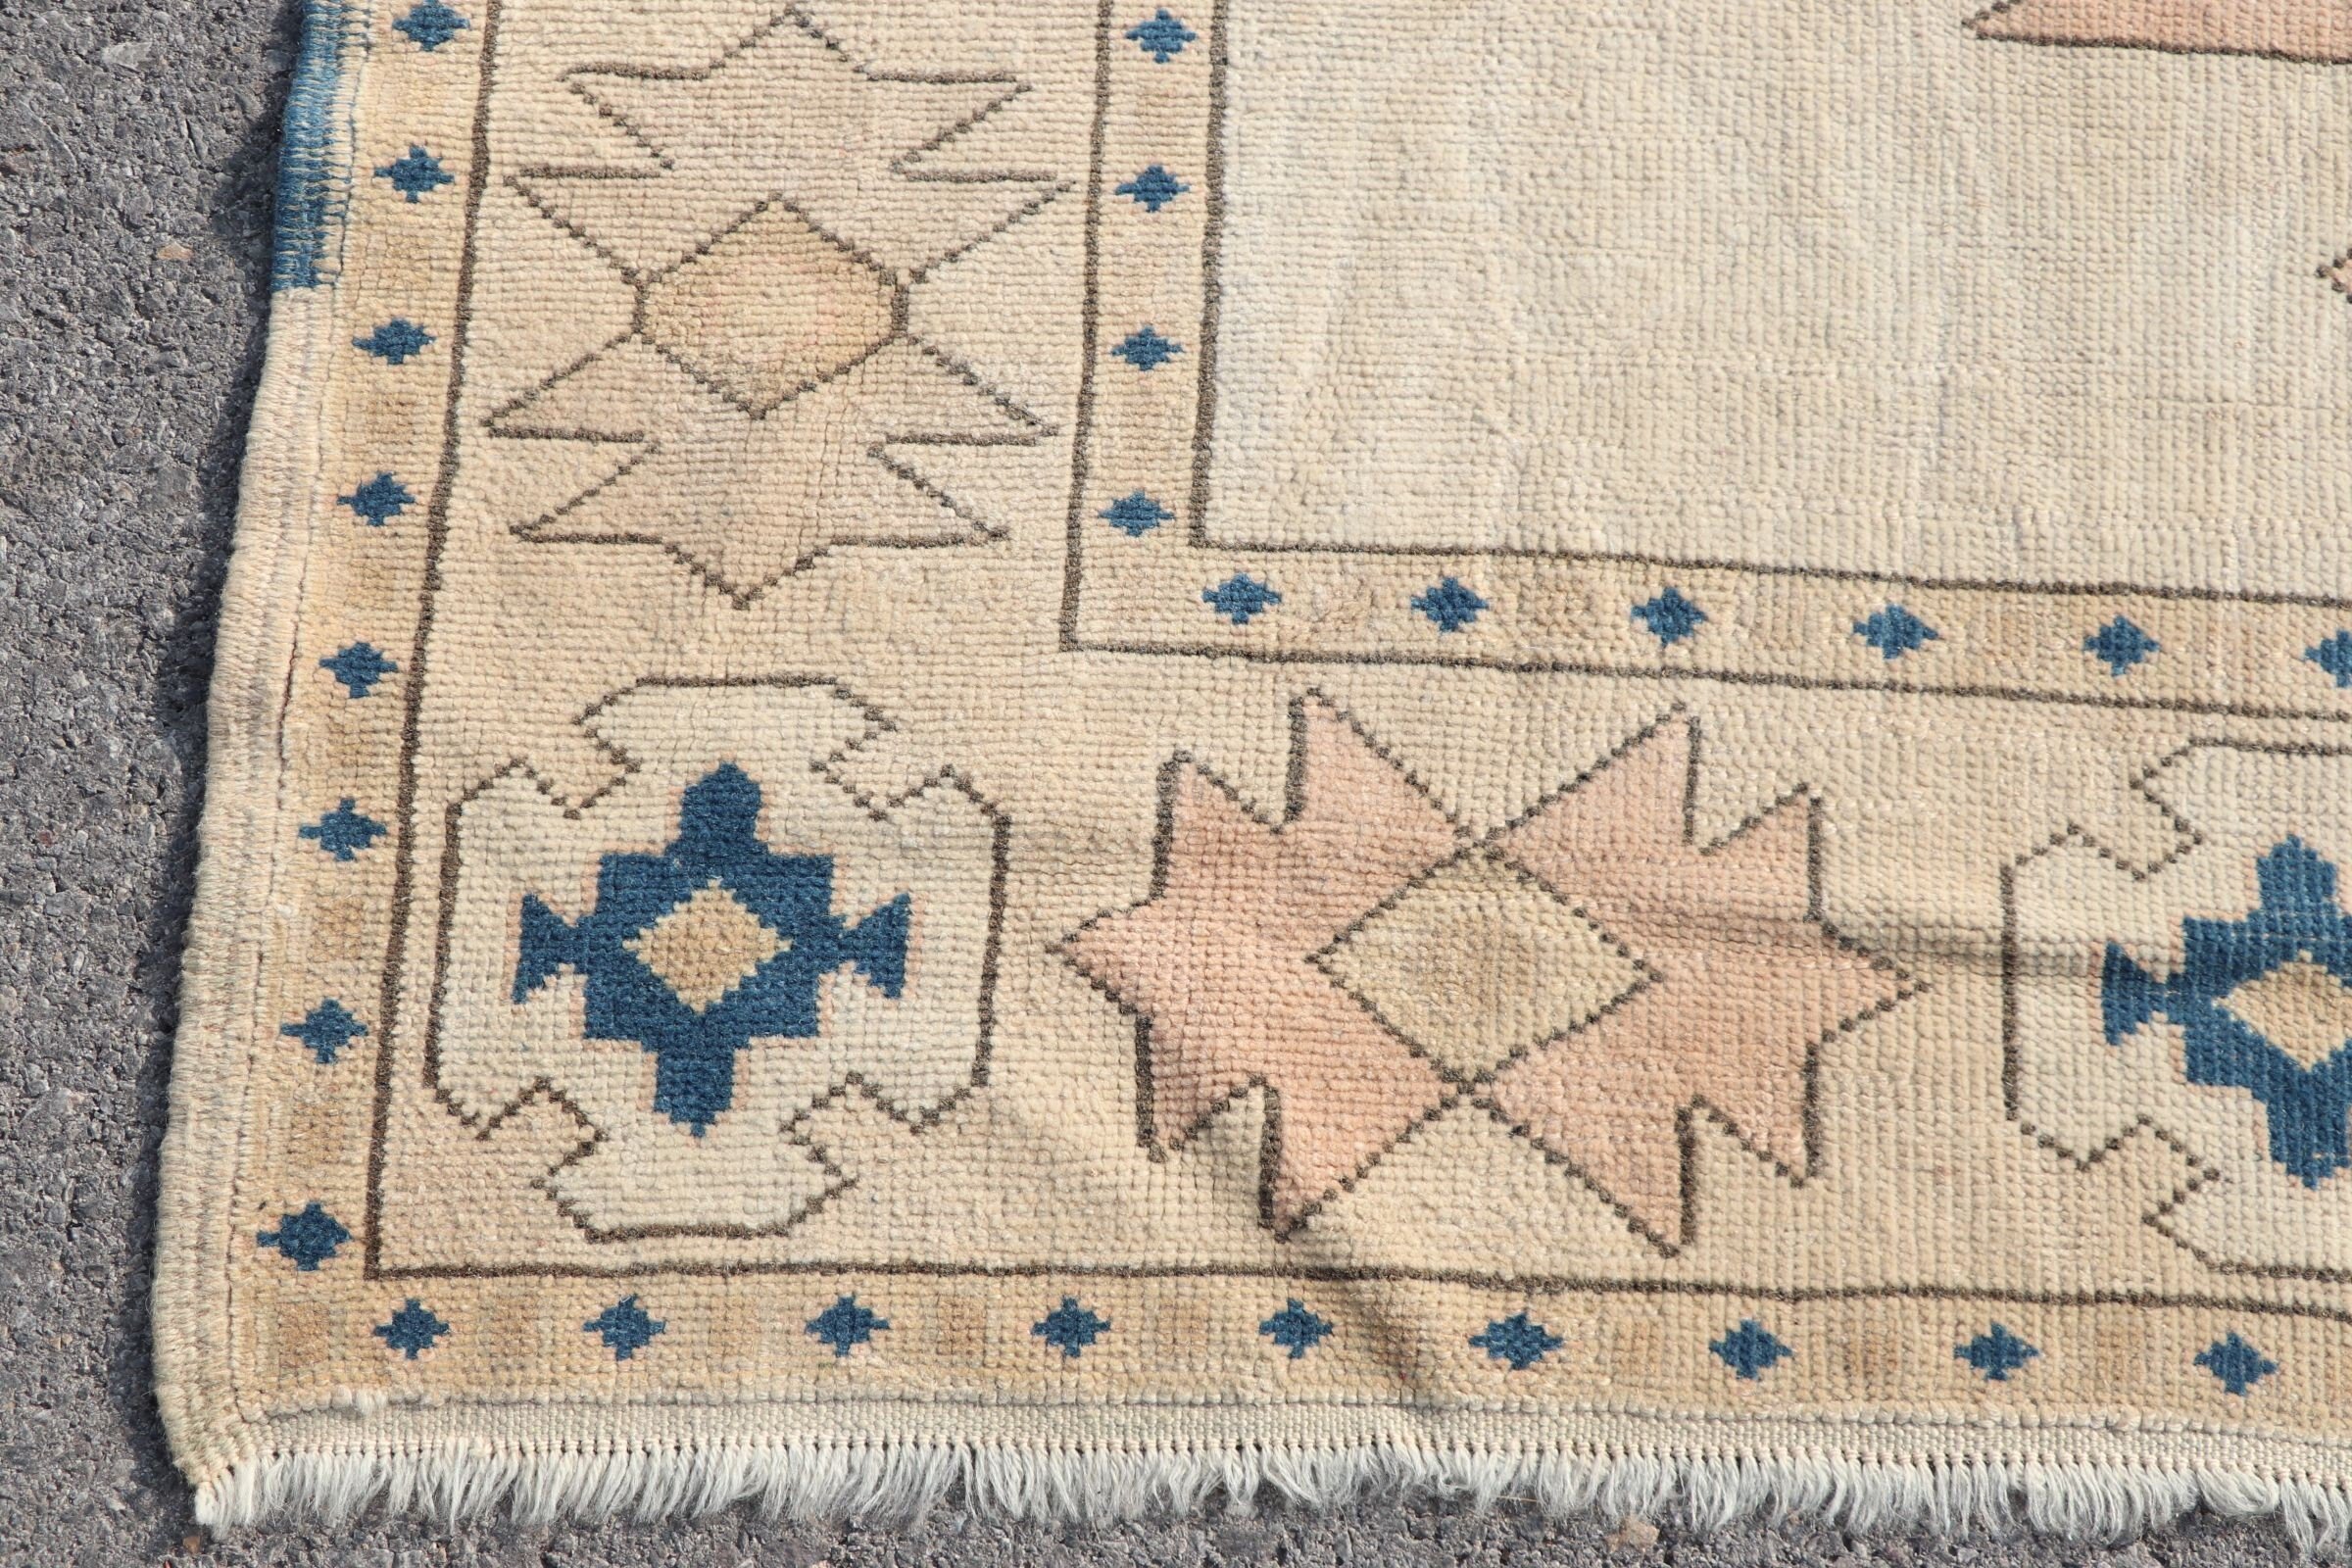 Vintage Rug, Dining Room Rugs, Cool Rugs, Moroccan Rug, Turkish Rug, Blue Anatolian Rugs, Aesthetic Rug, Bedroom Rug, 5.9x8.1 ft Large Rug